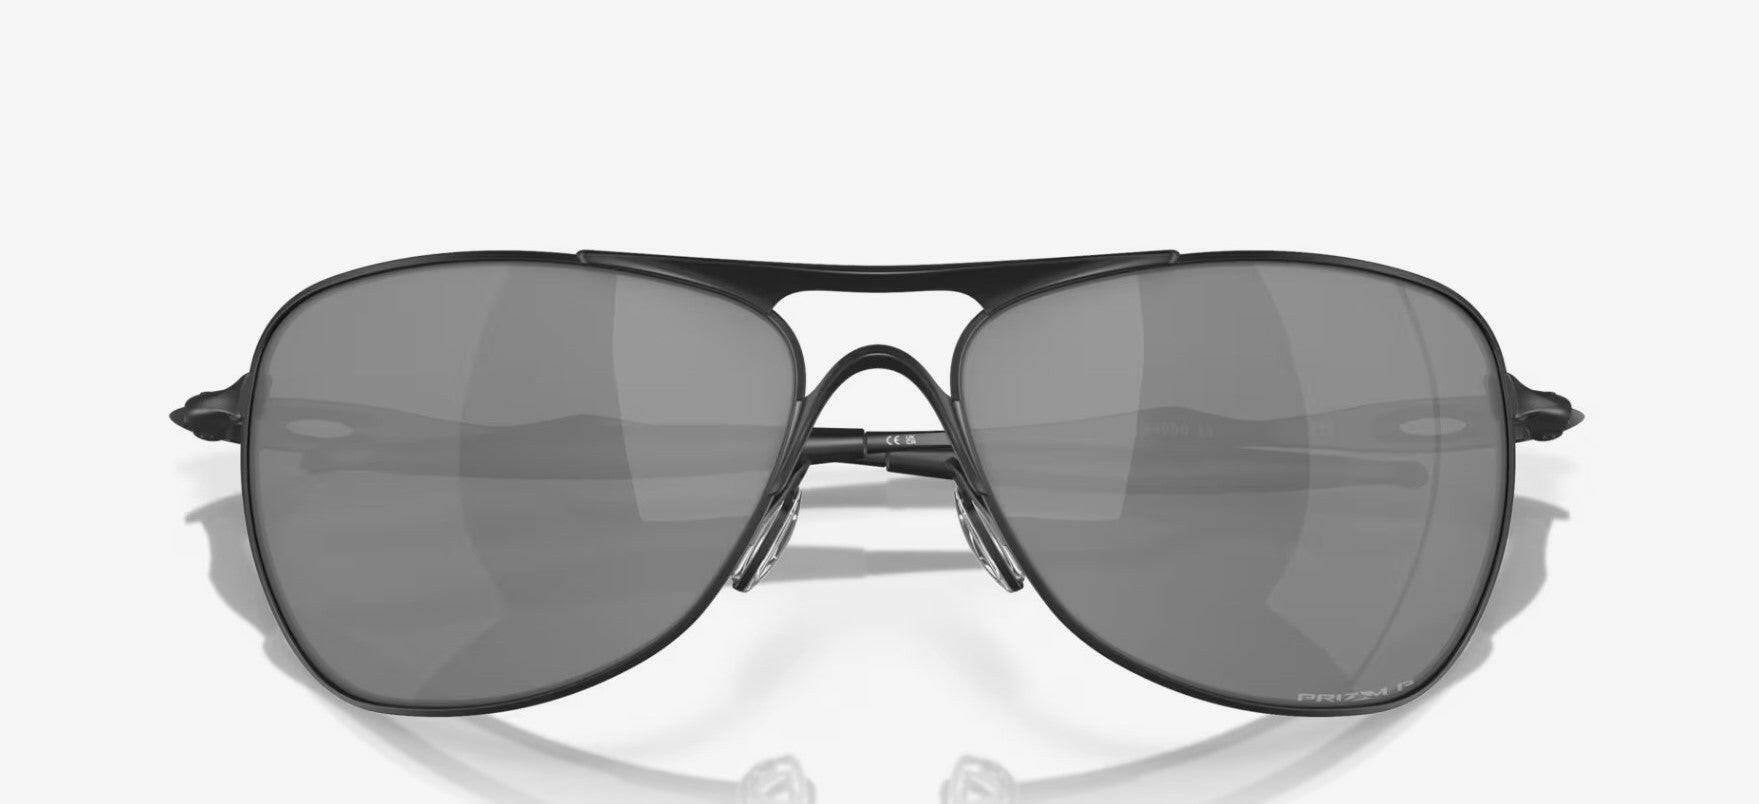 Oakley Crosshair Sunglasses.